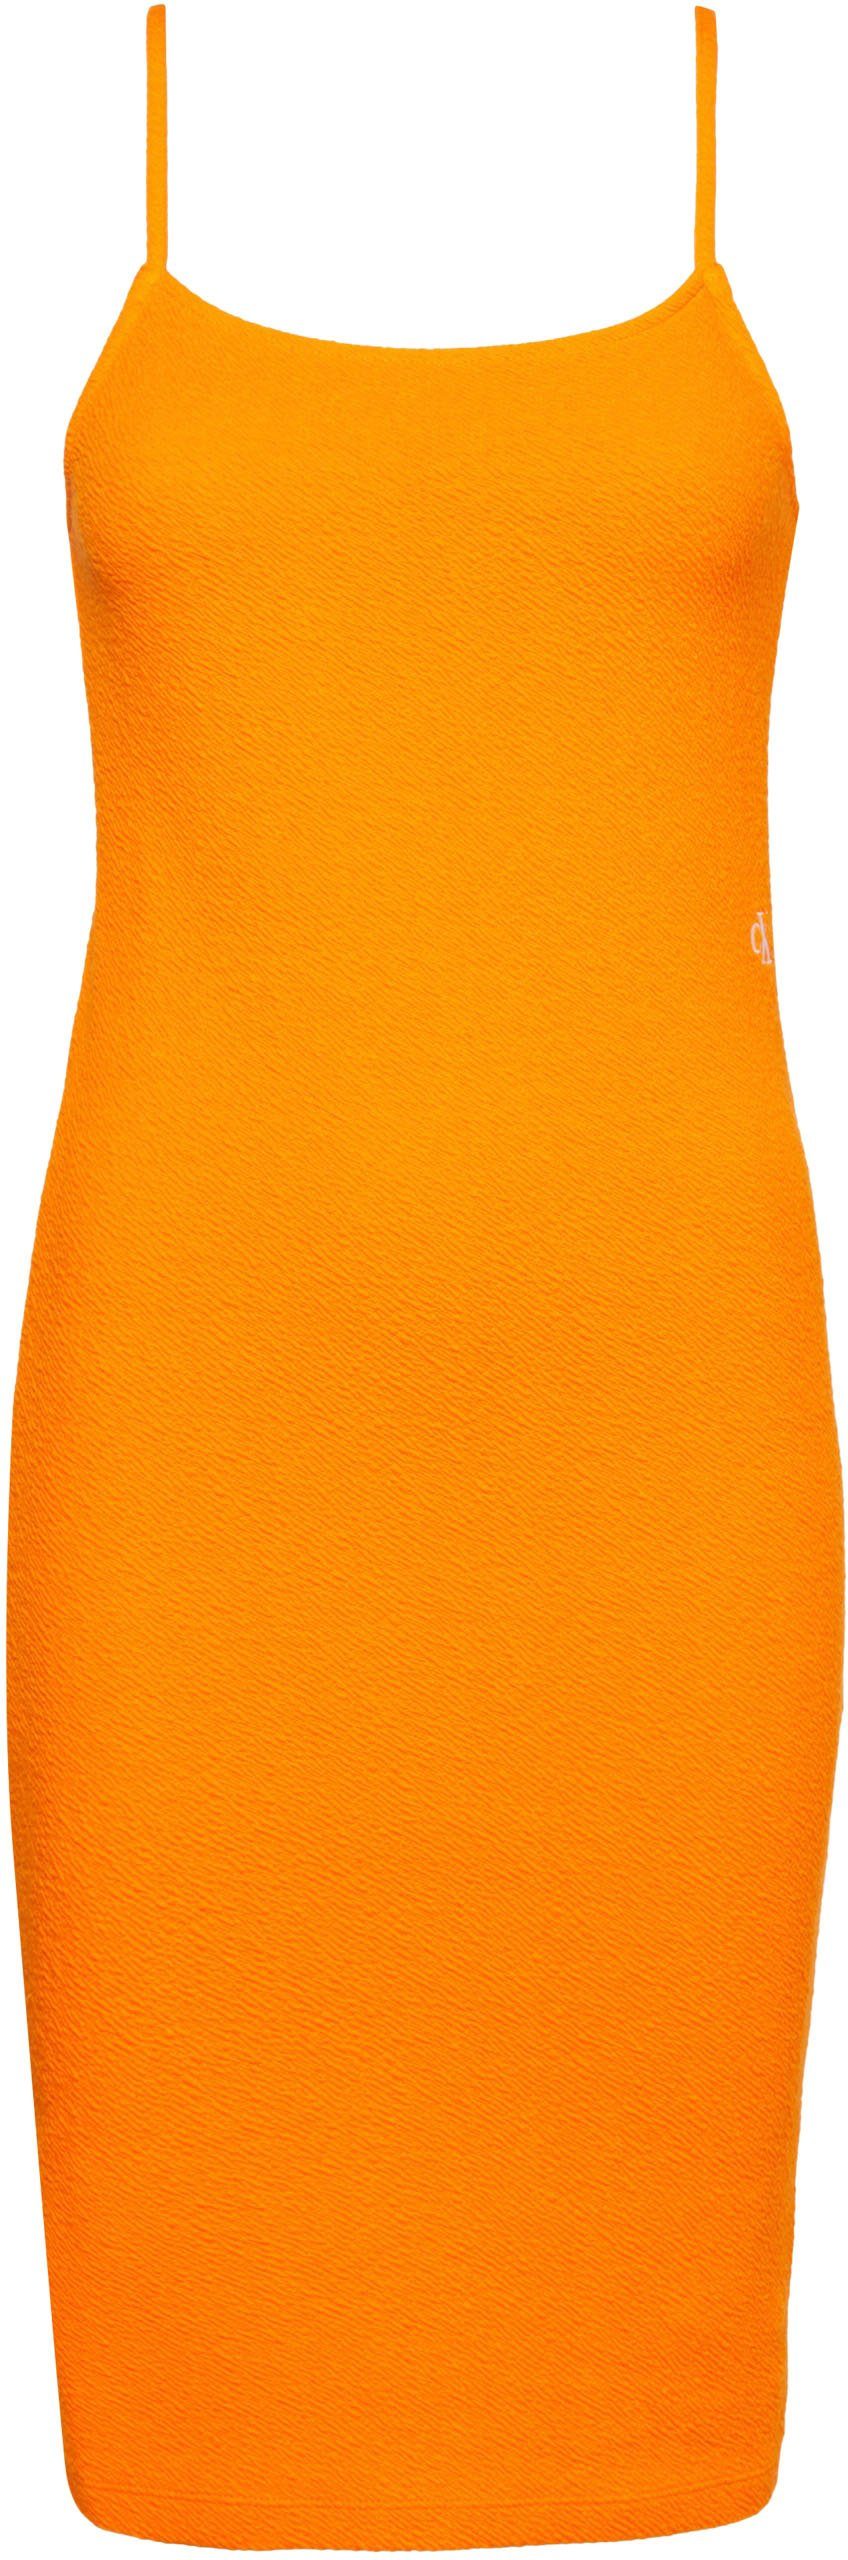 Calvin Klein Jeans Spaghettikleid SLUB strukturiertem orange aus STRAPPY Material RIB